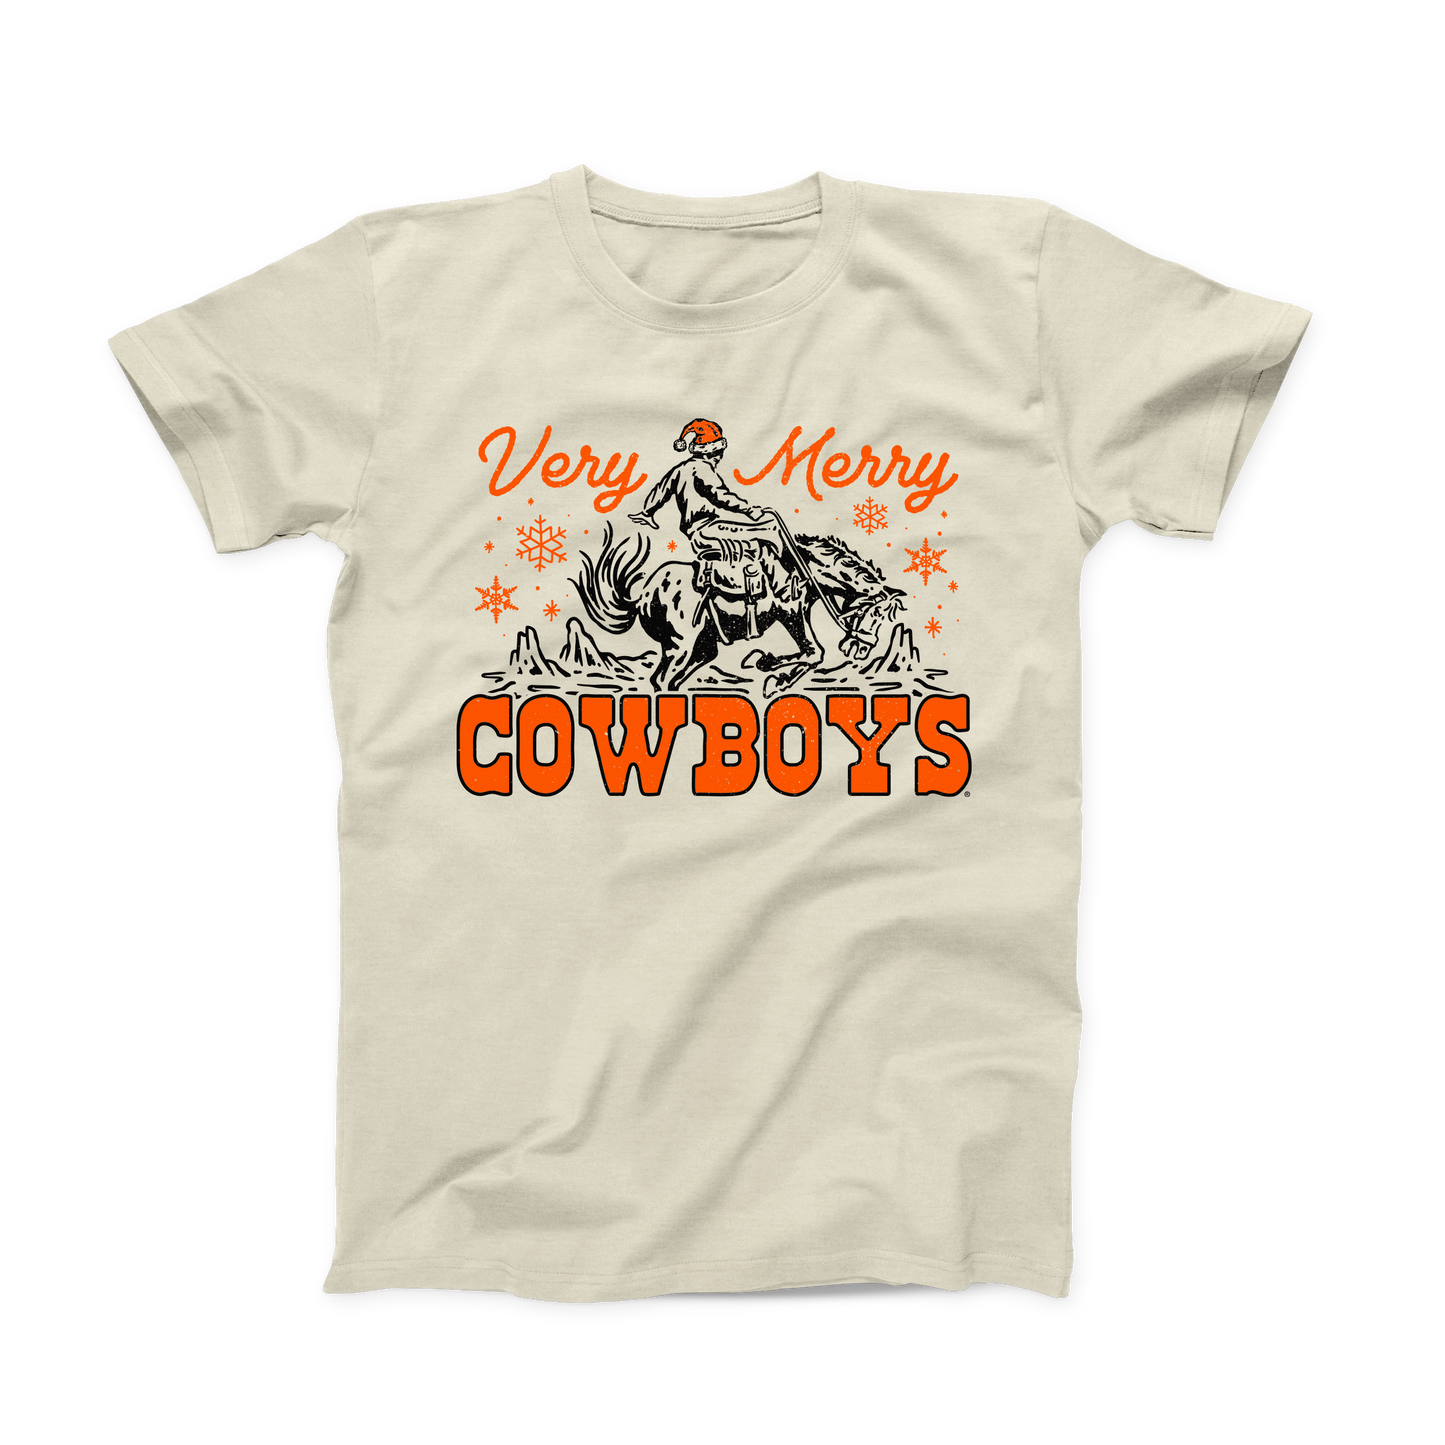 OSU - December '23 - Very Merry Cowboys